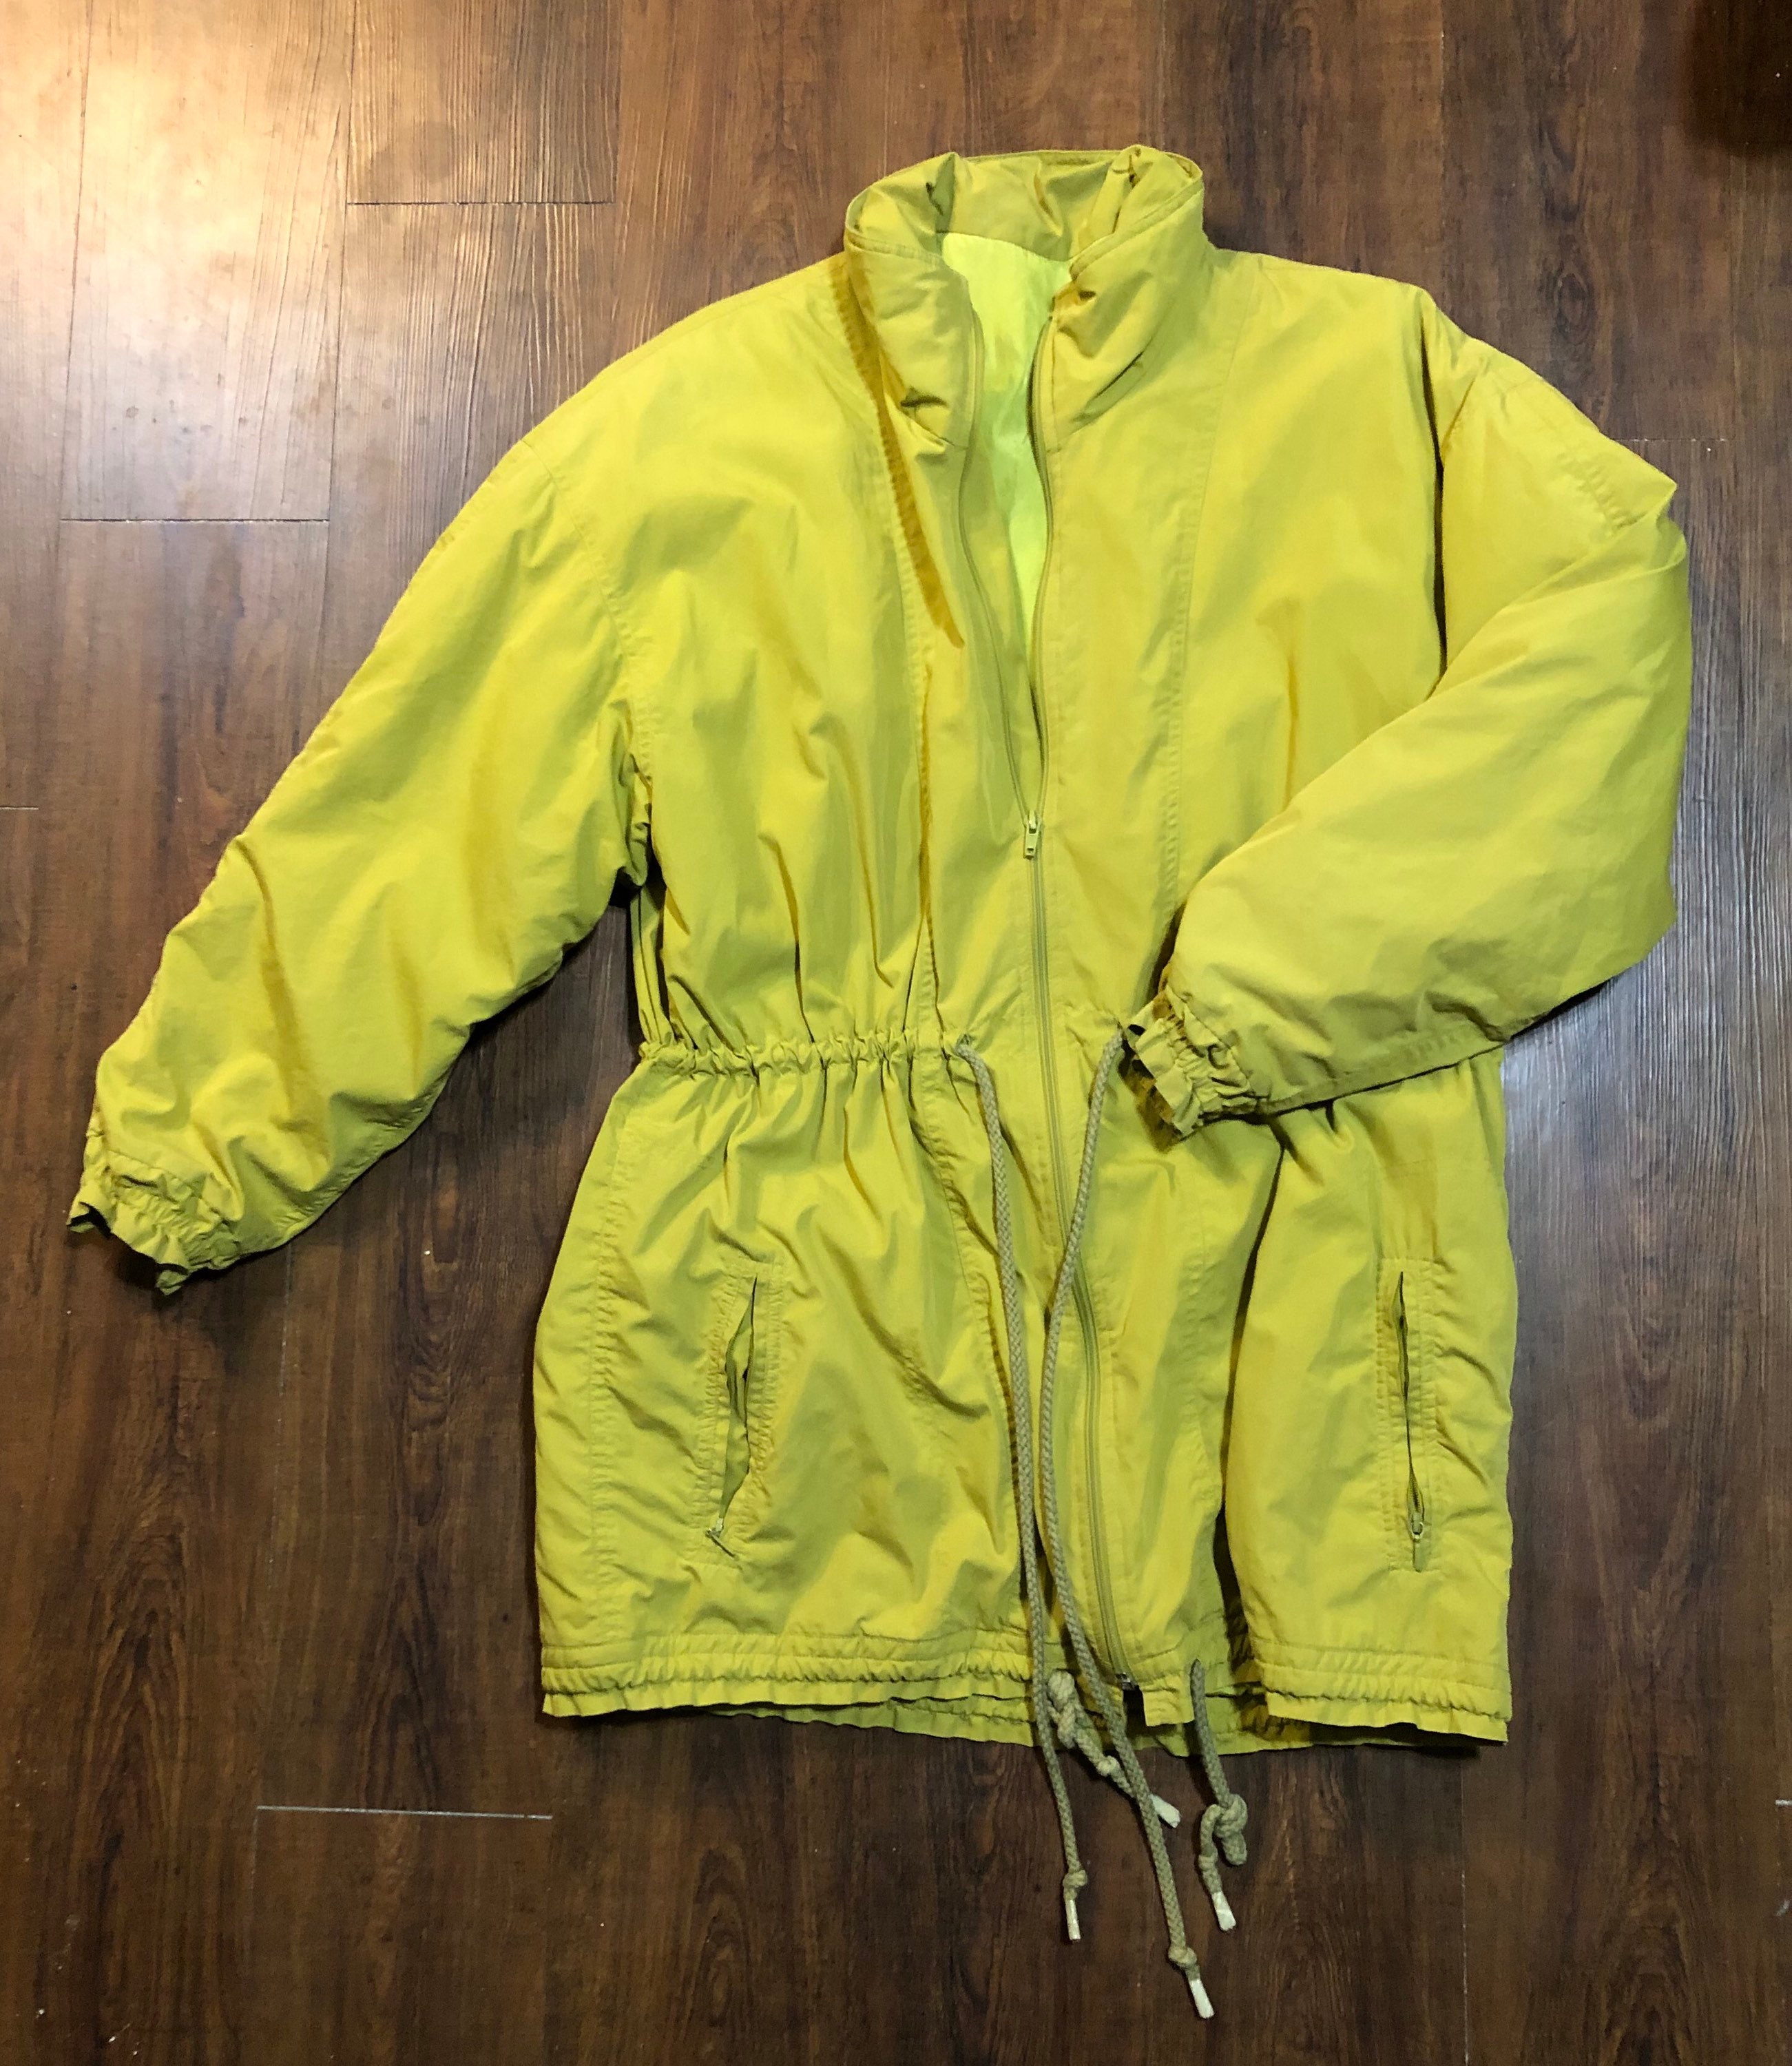 Unisex women's men's lime green yellow winter jacket | Etsy